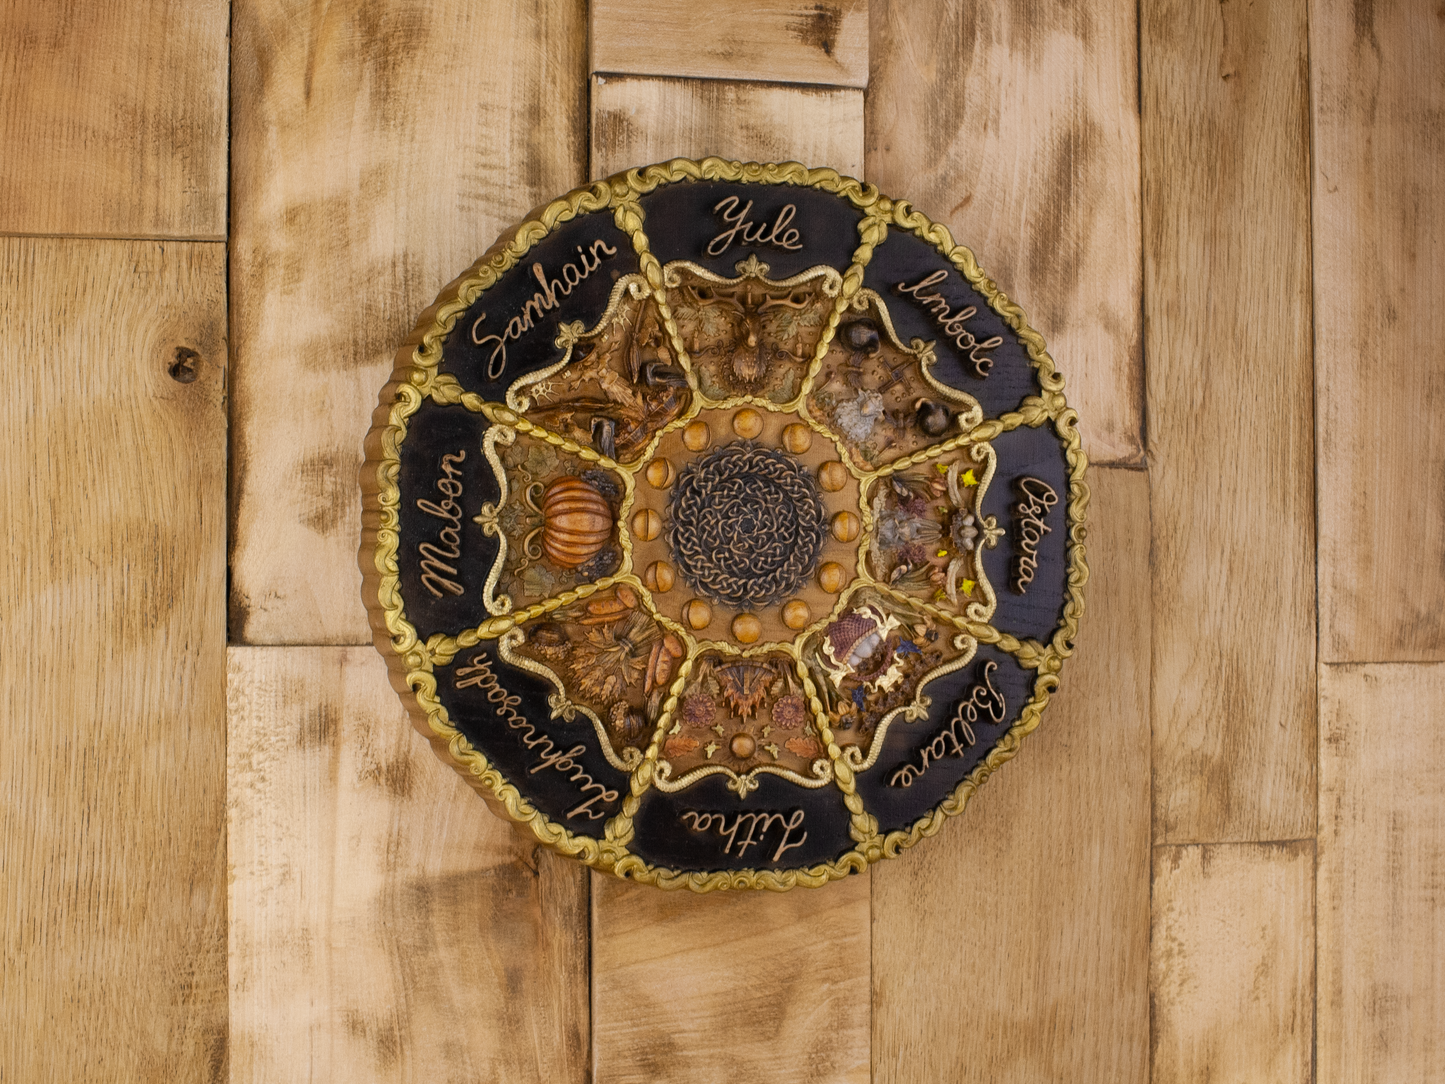 Wheel of the Year Pagan calendar